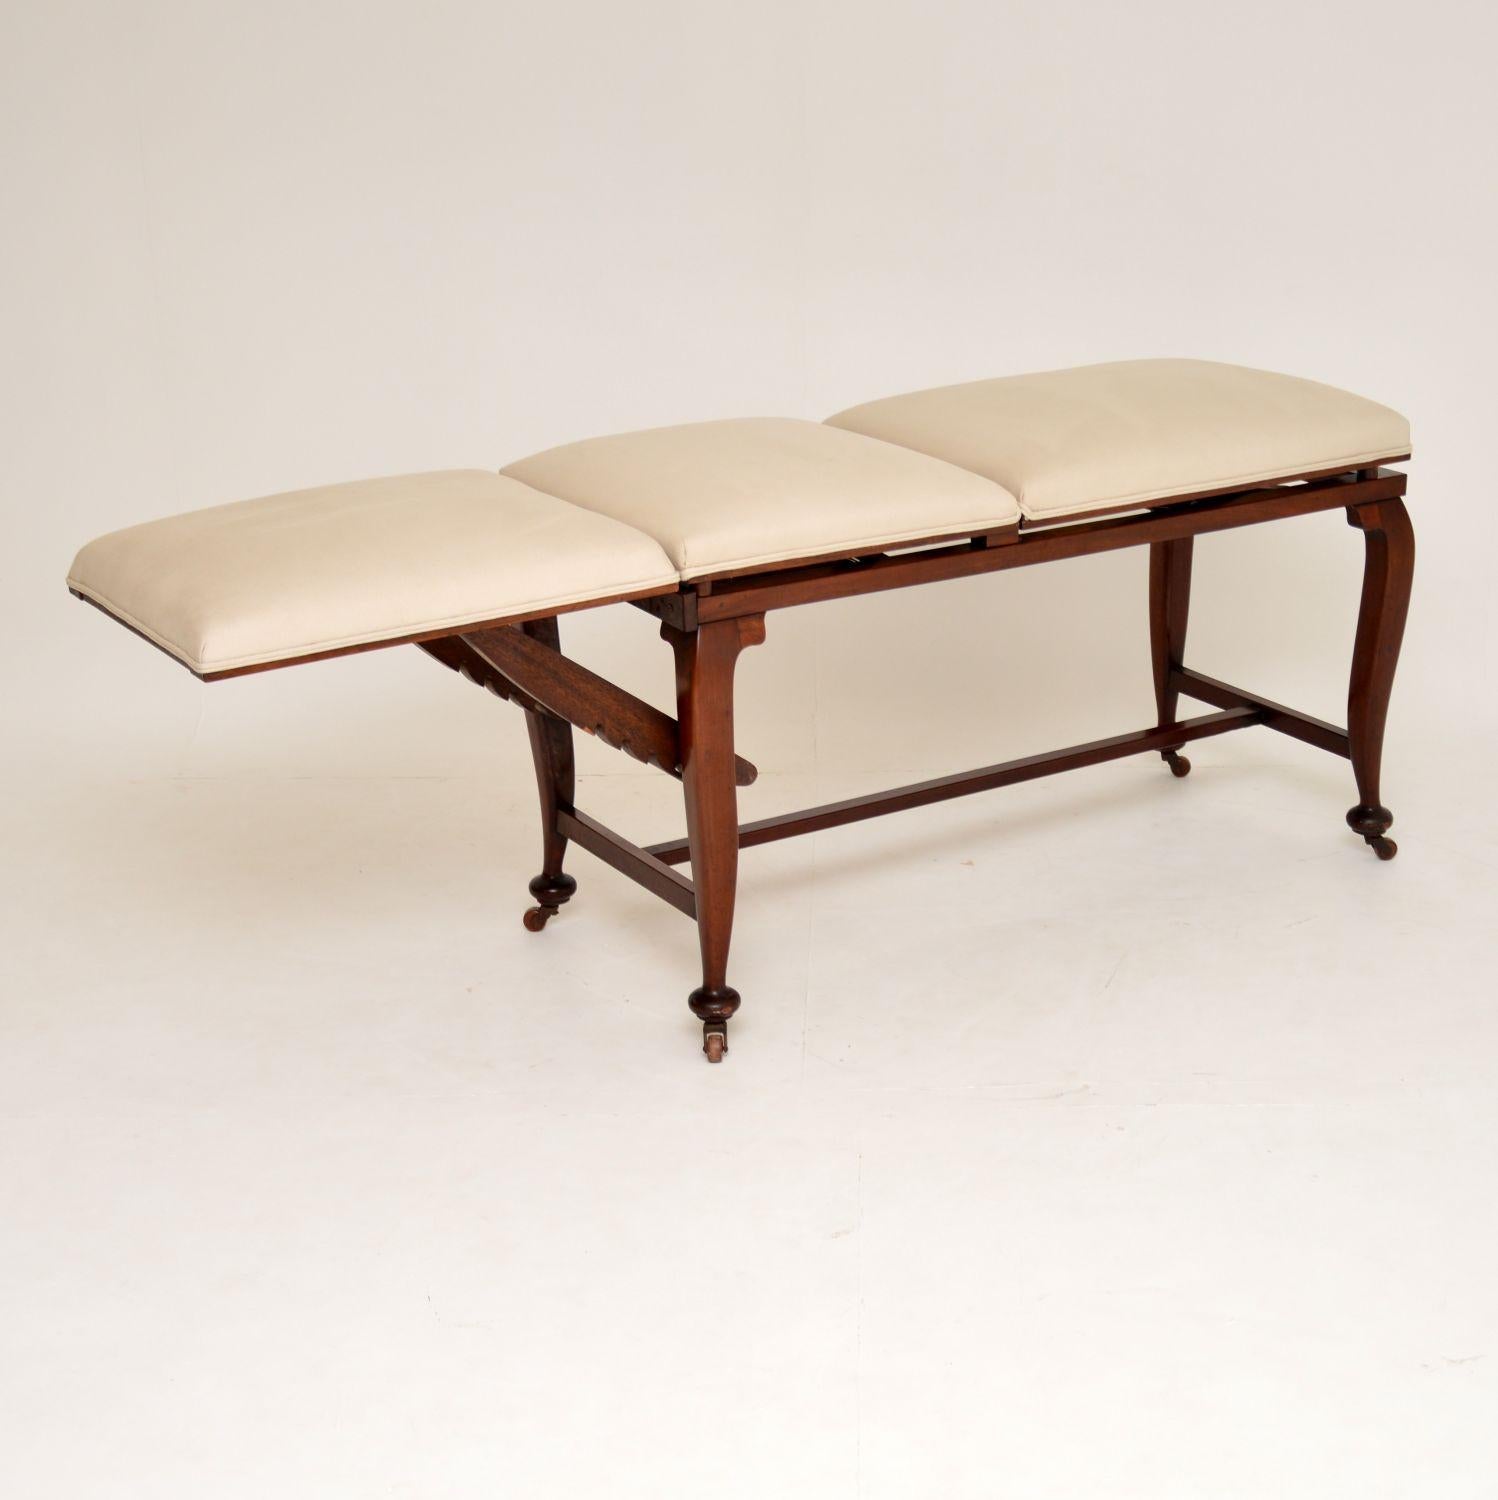 British Antique Victorian Doctors Bed / Chaise Longue